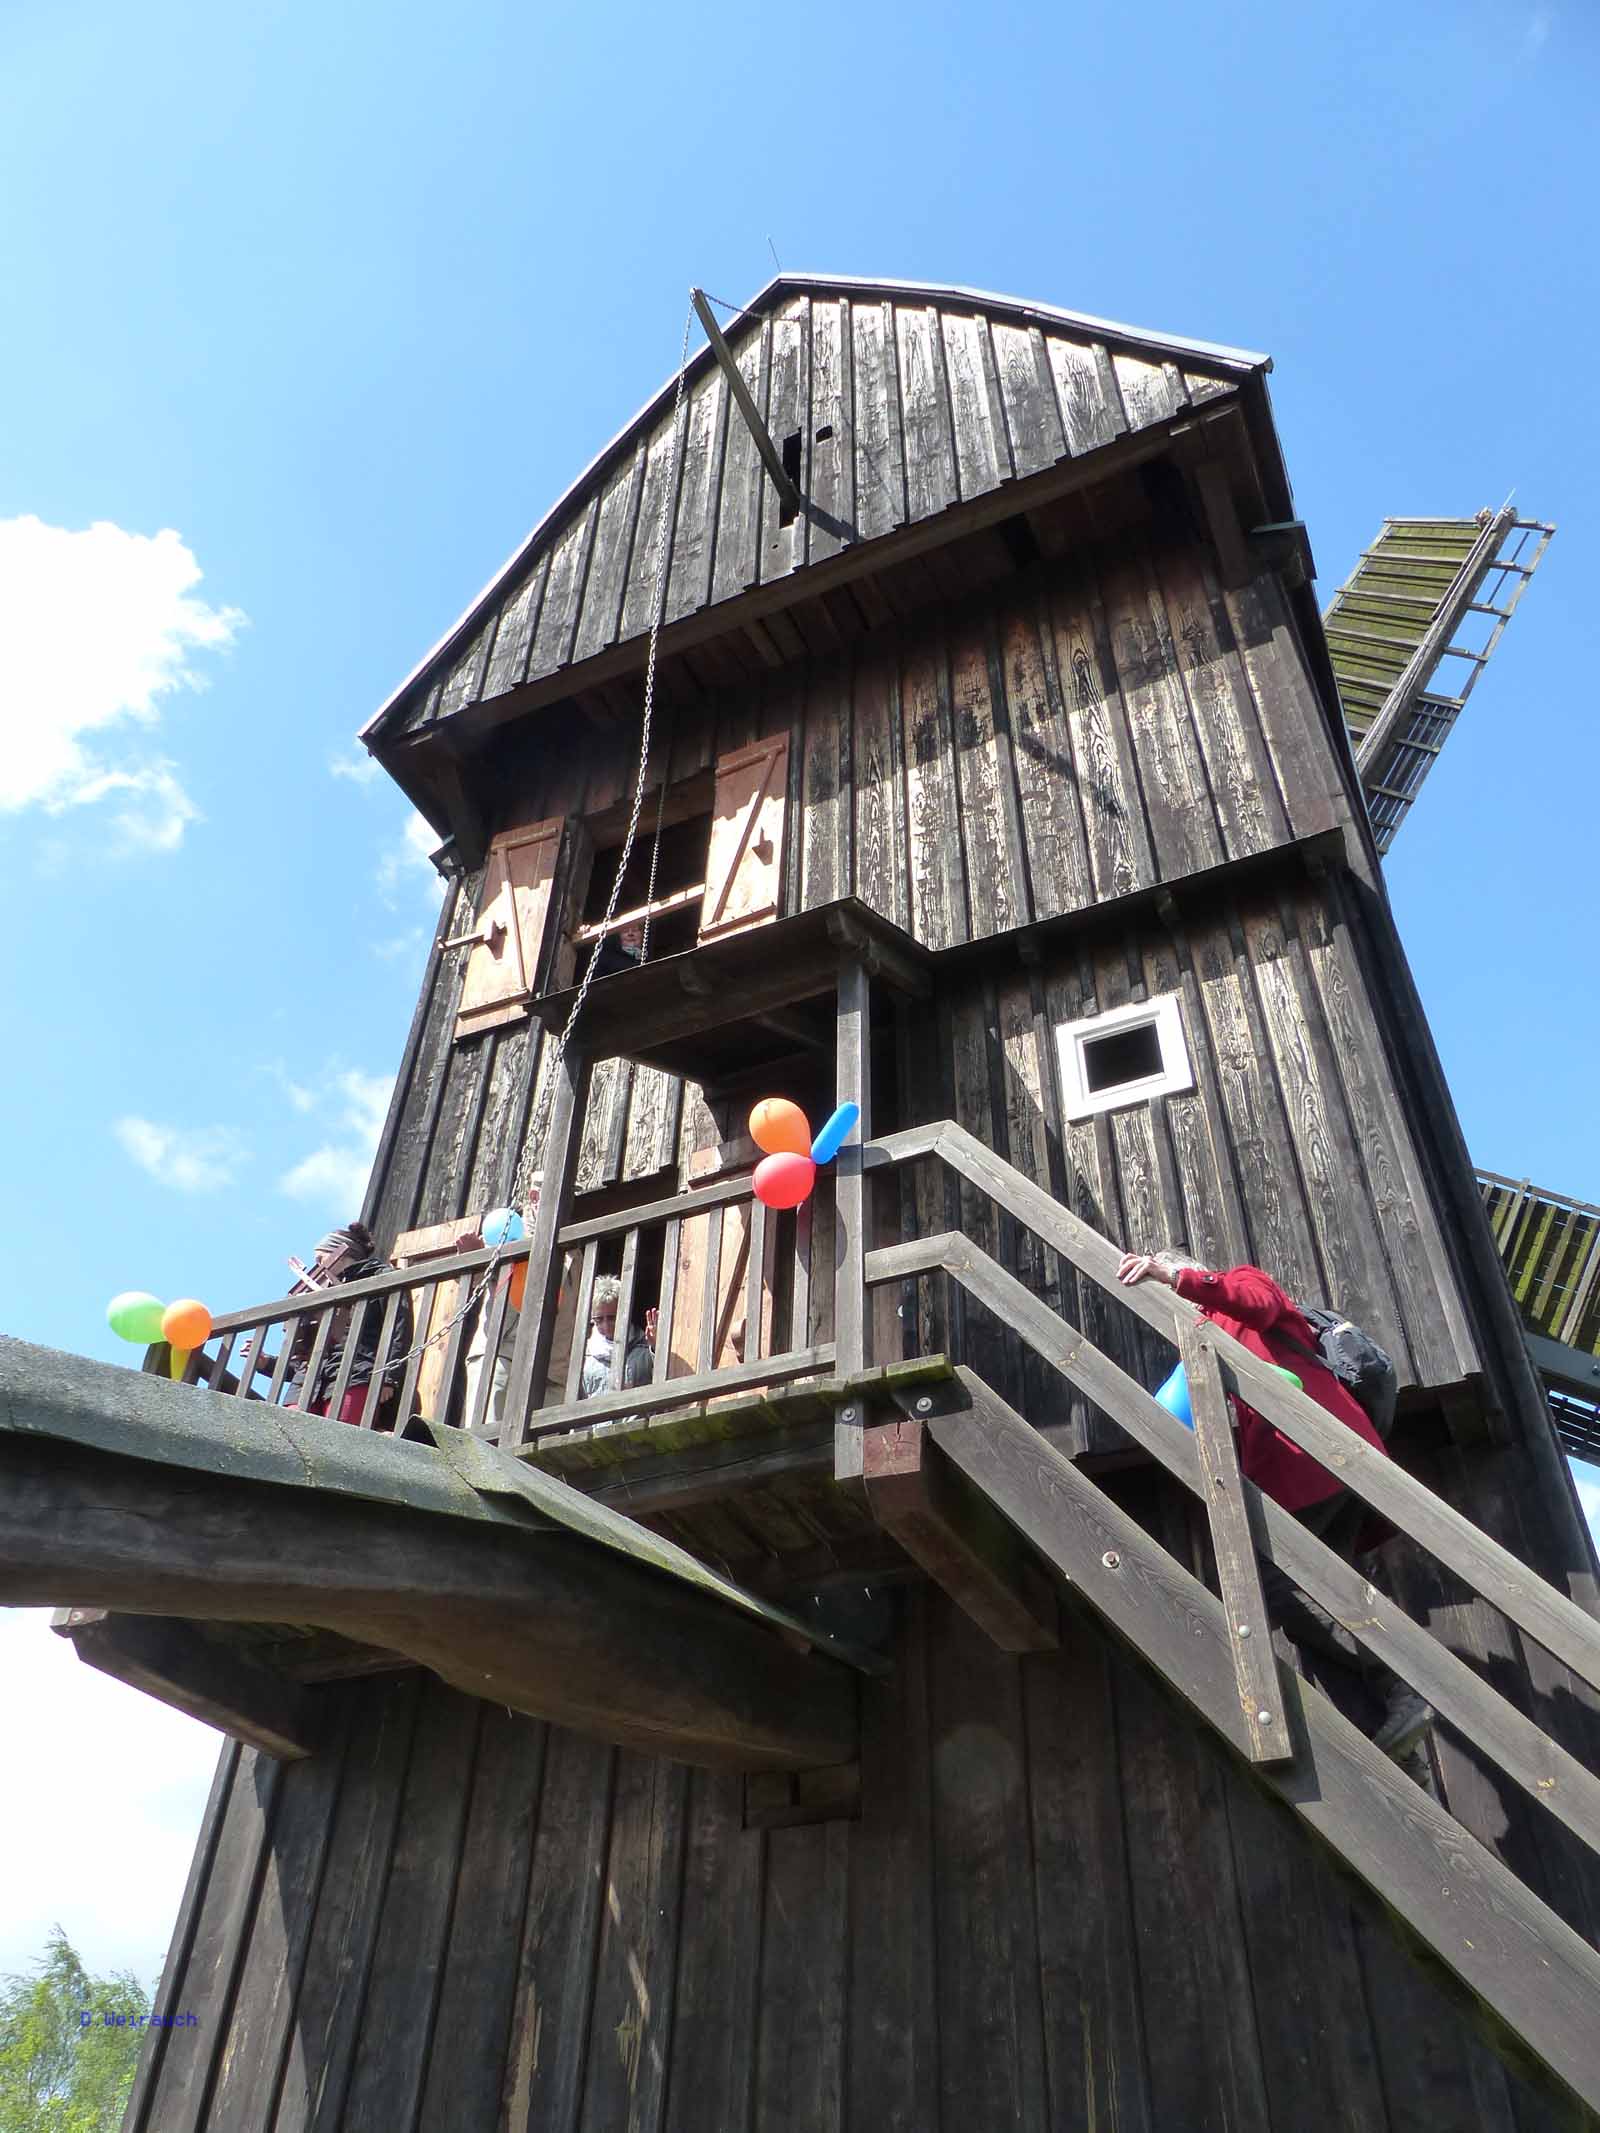 Bockwindmühle in Cammer bei Bad Belzig